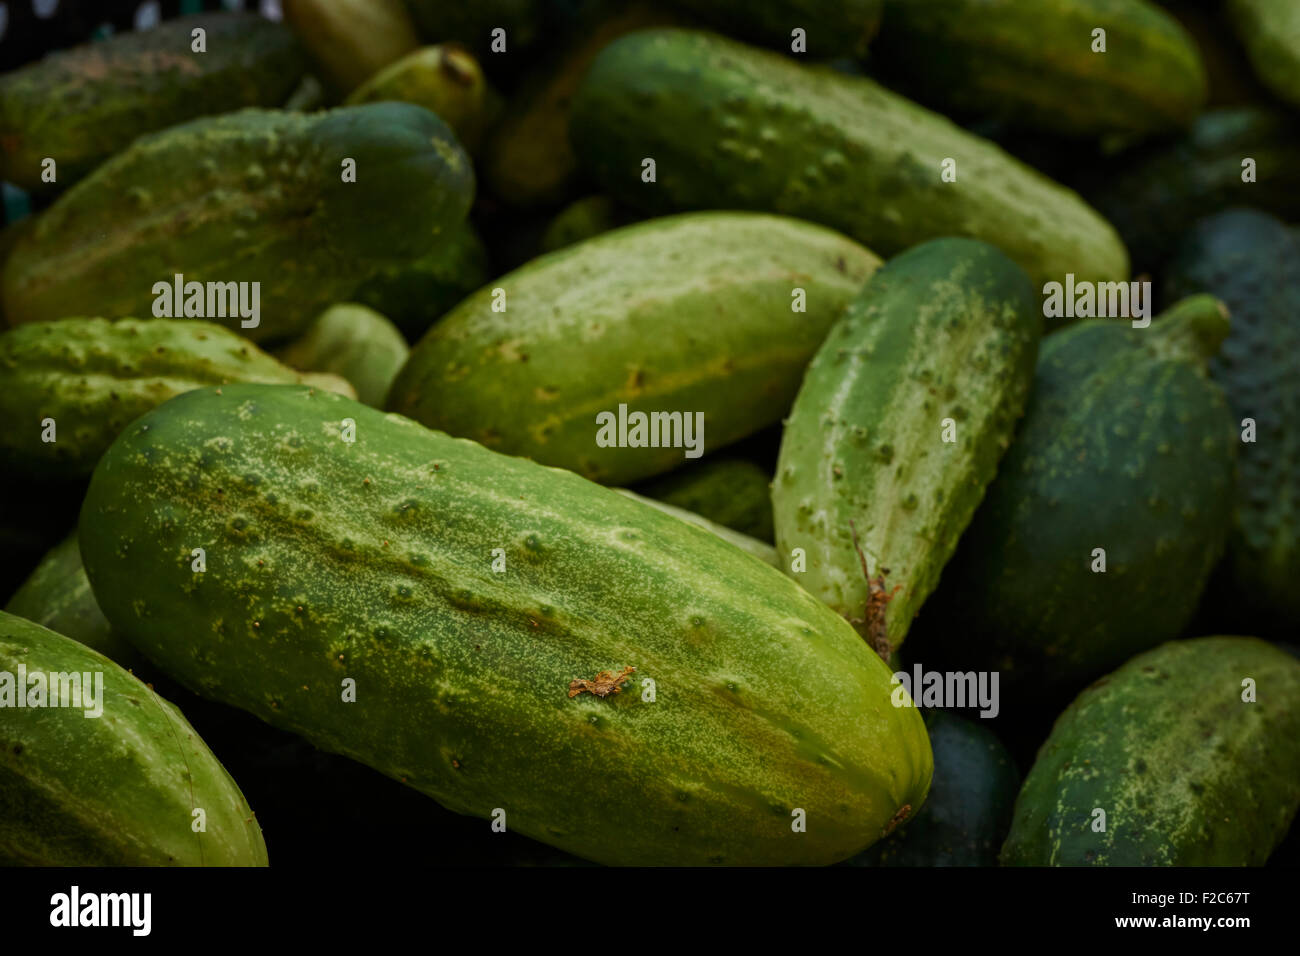 Pickling cucumbers at the Union Square Greenmarket, Manhattan, New York City, USA Stock Photo